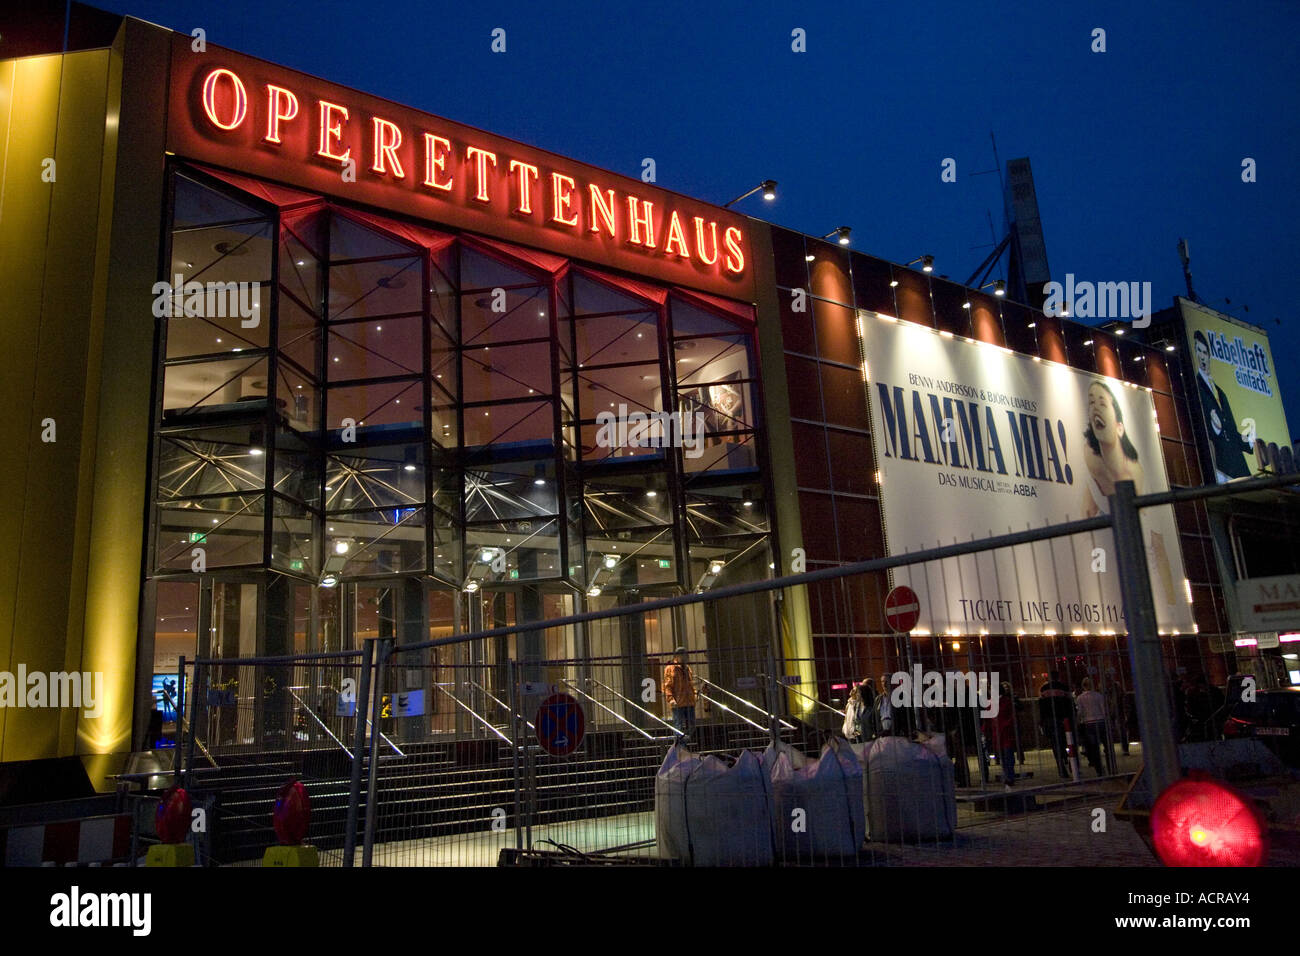 Operettenhaus, St Pauli, Reeperbahn, Hamburgo, Alemania. Foto de stock